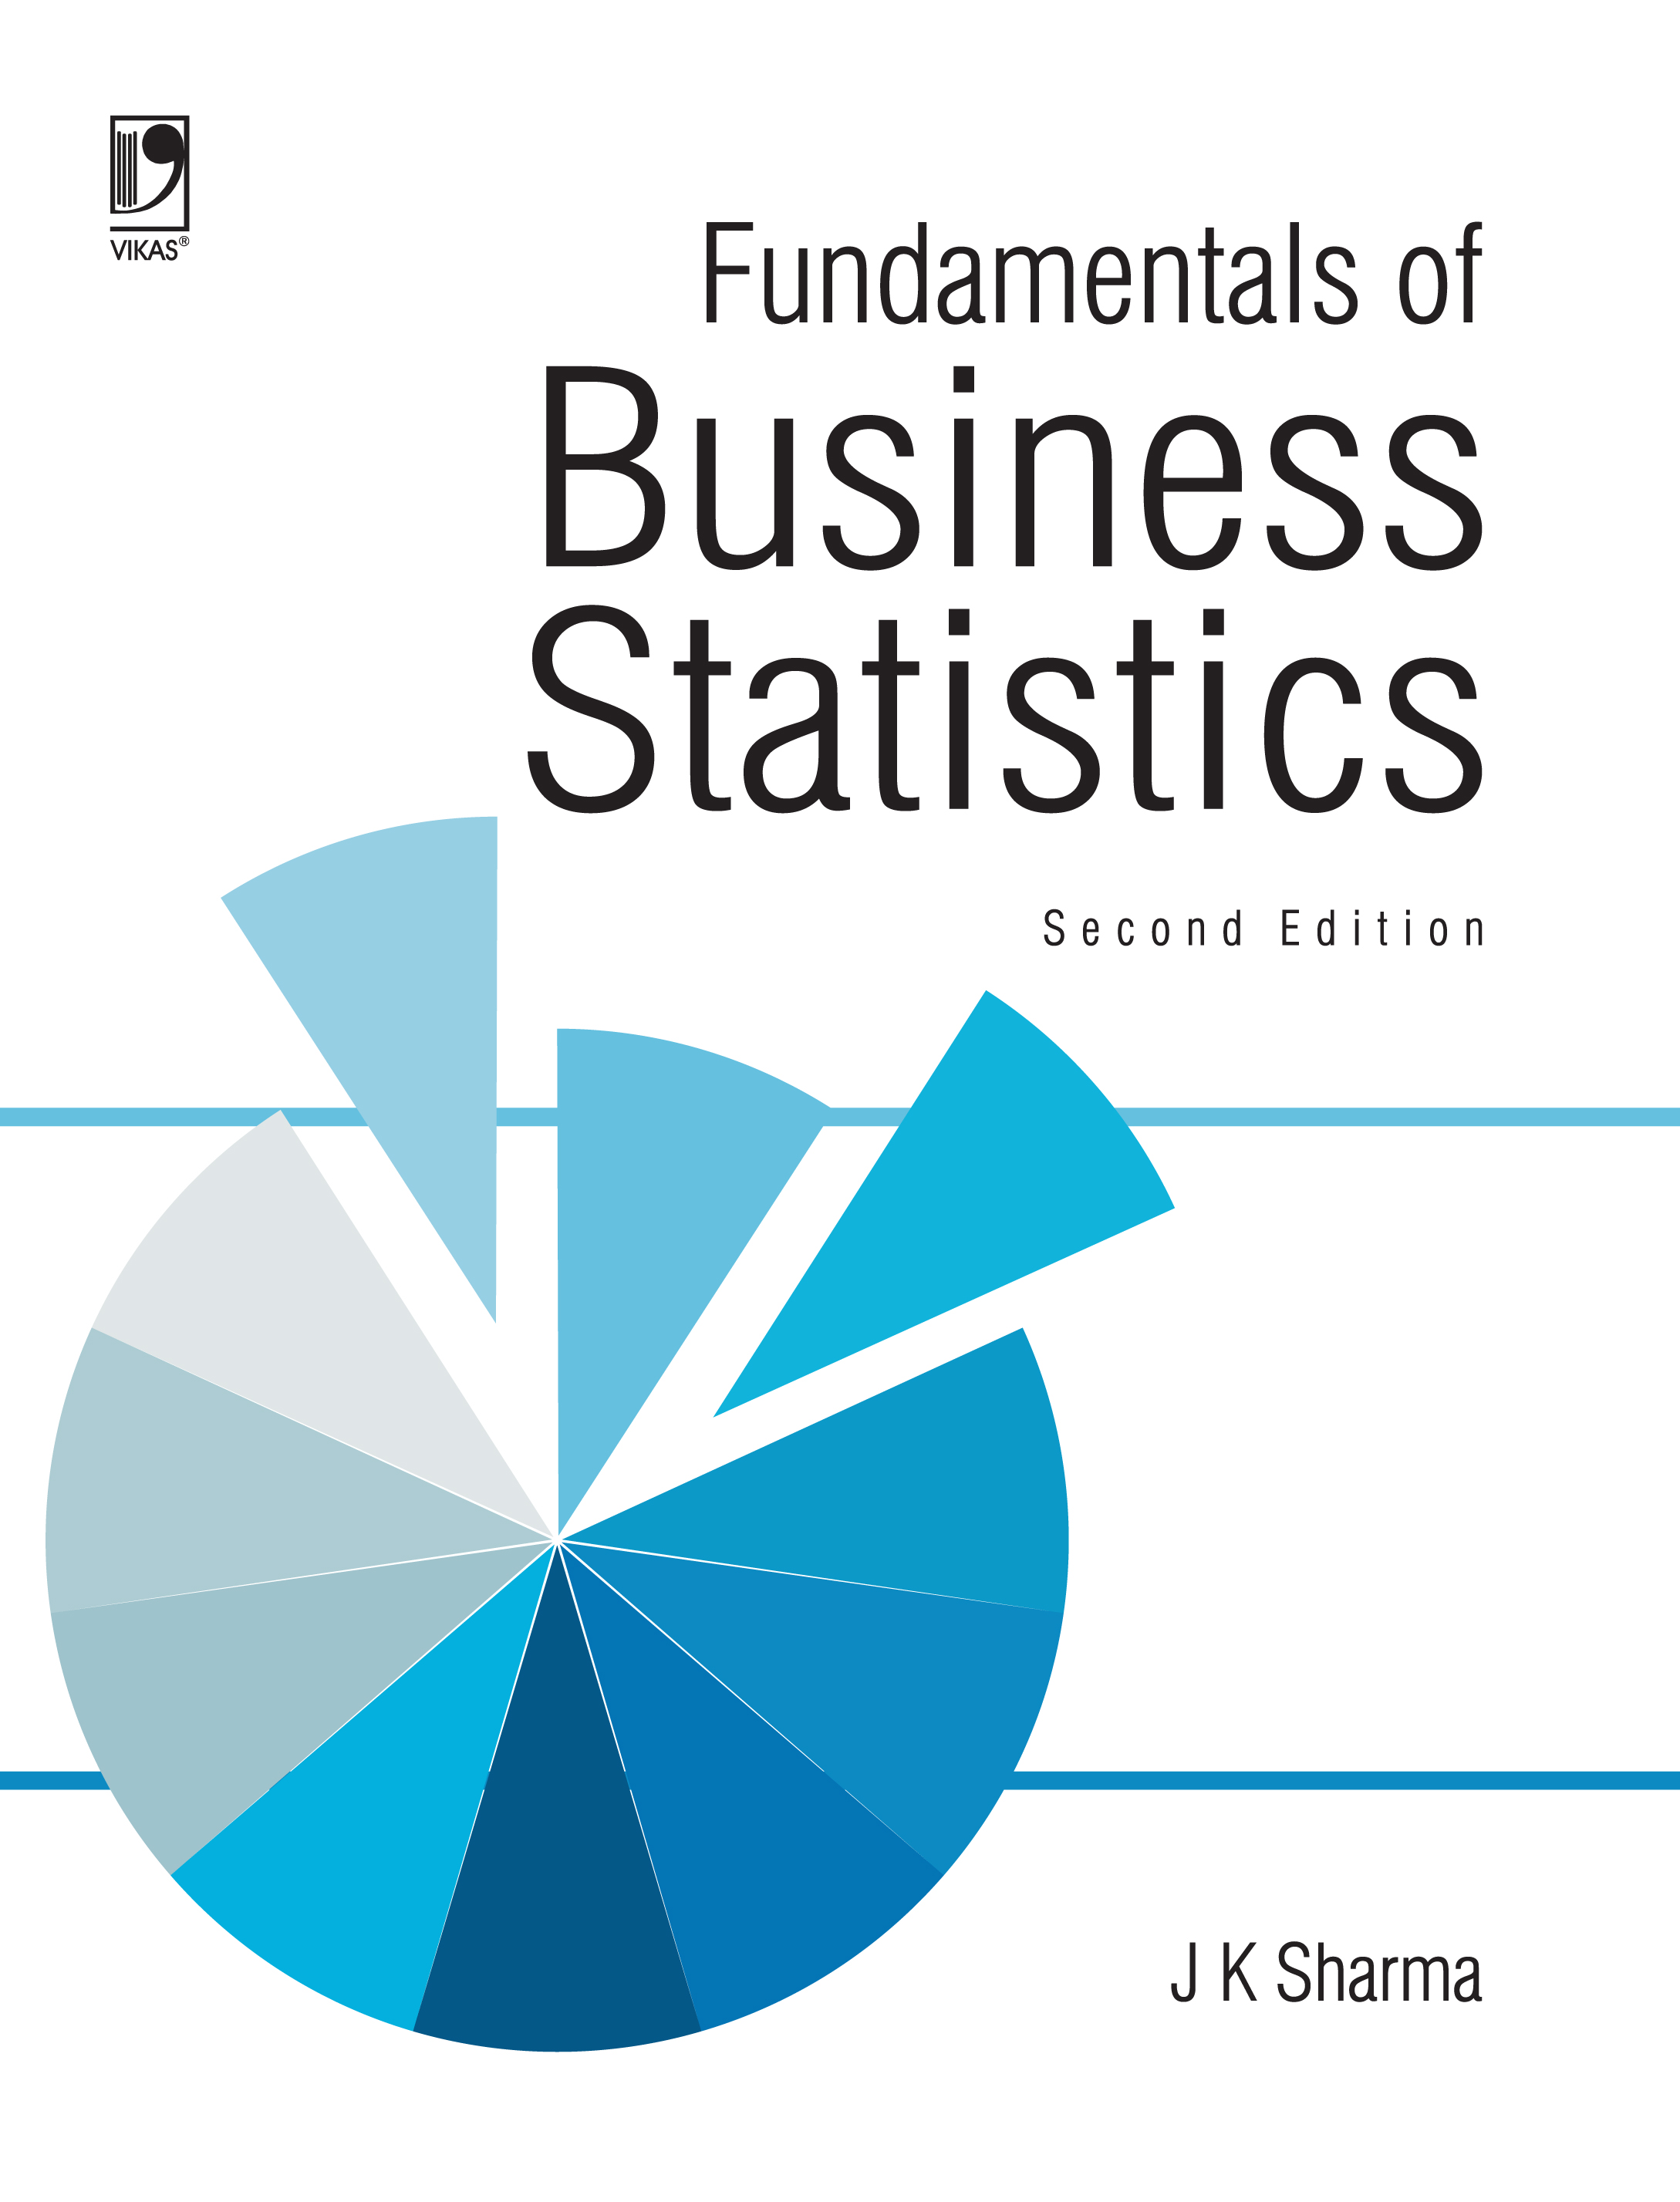 Fundamentals of Business Statistics, 2e by J.K. Sharma